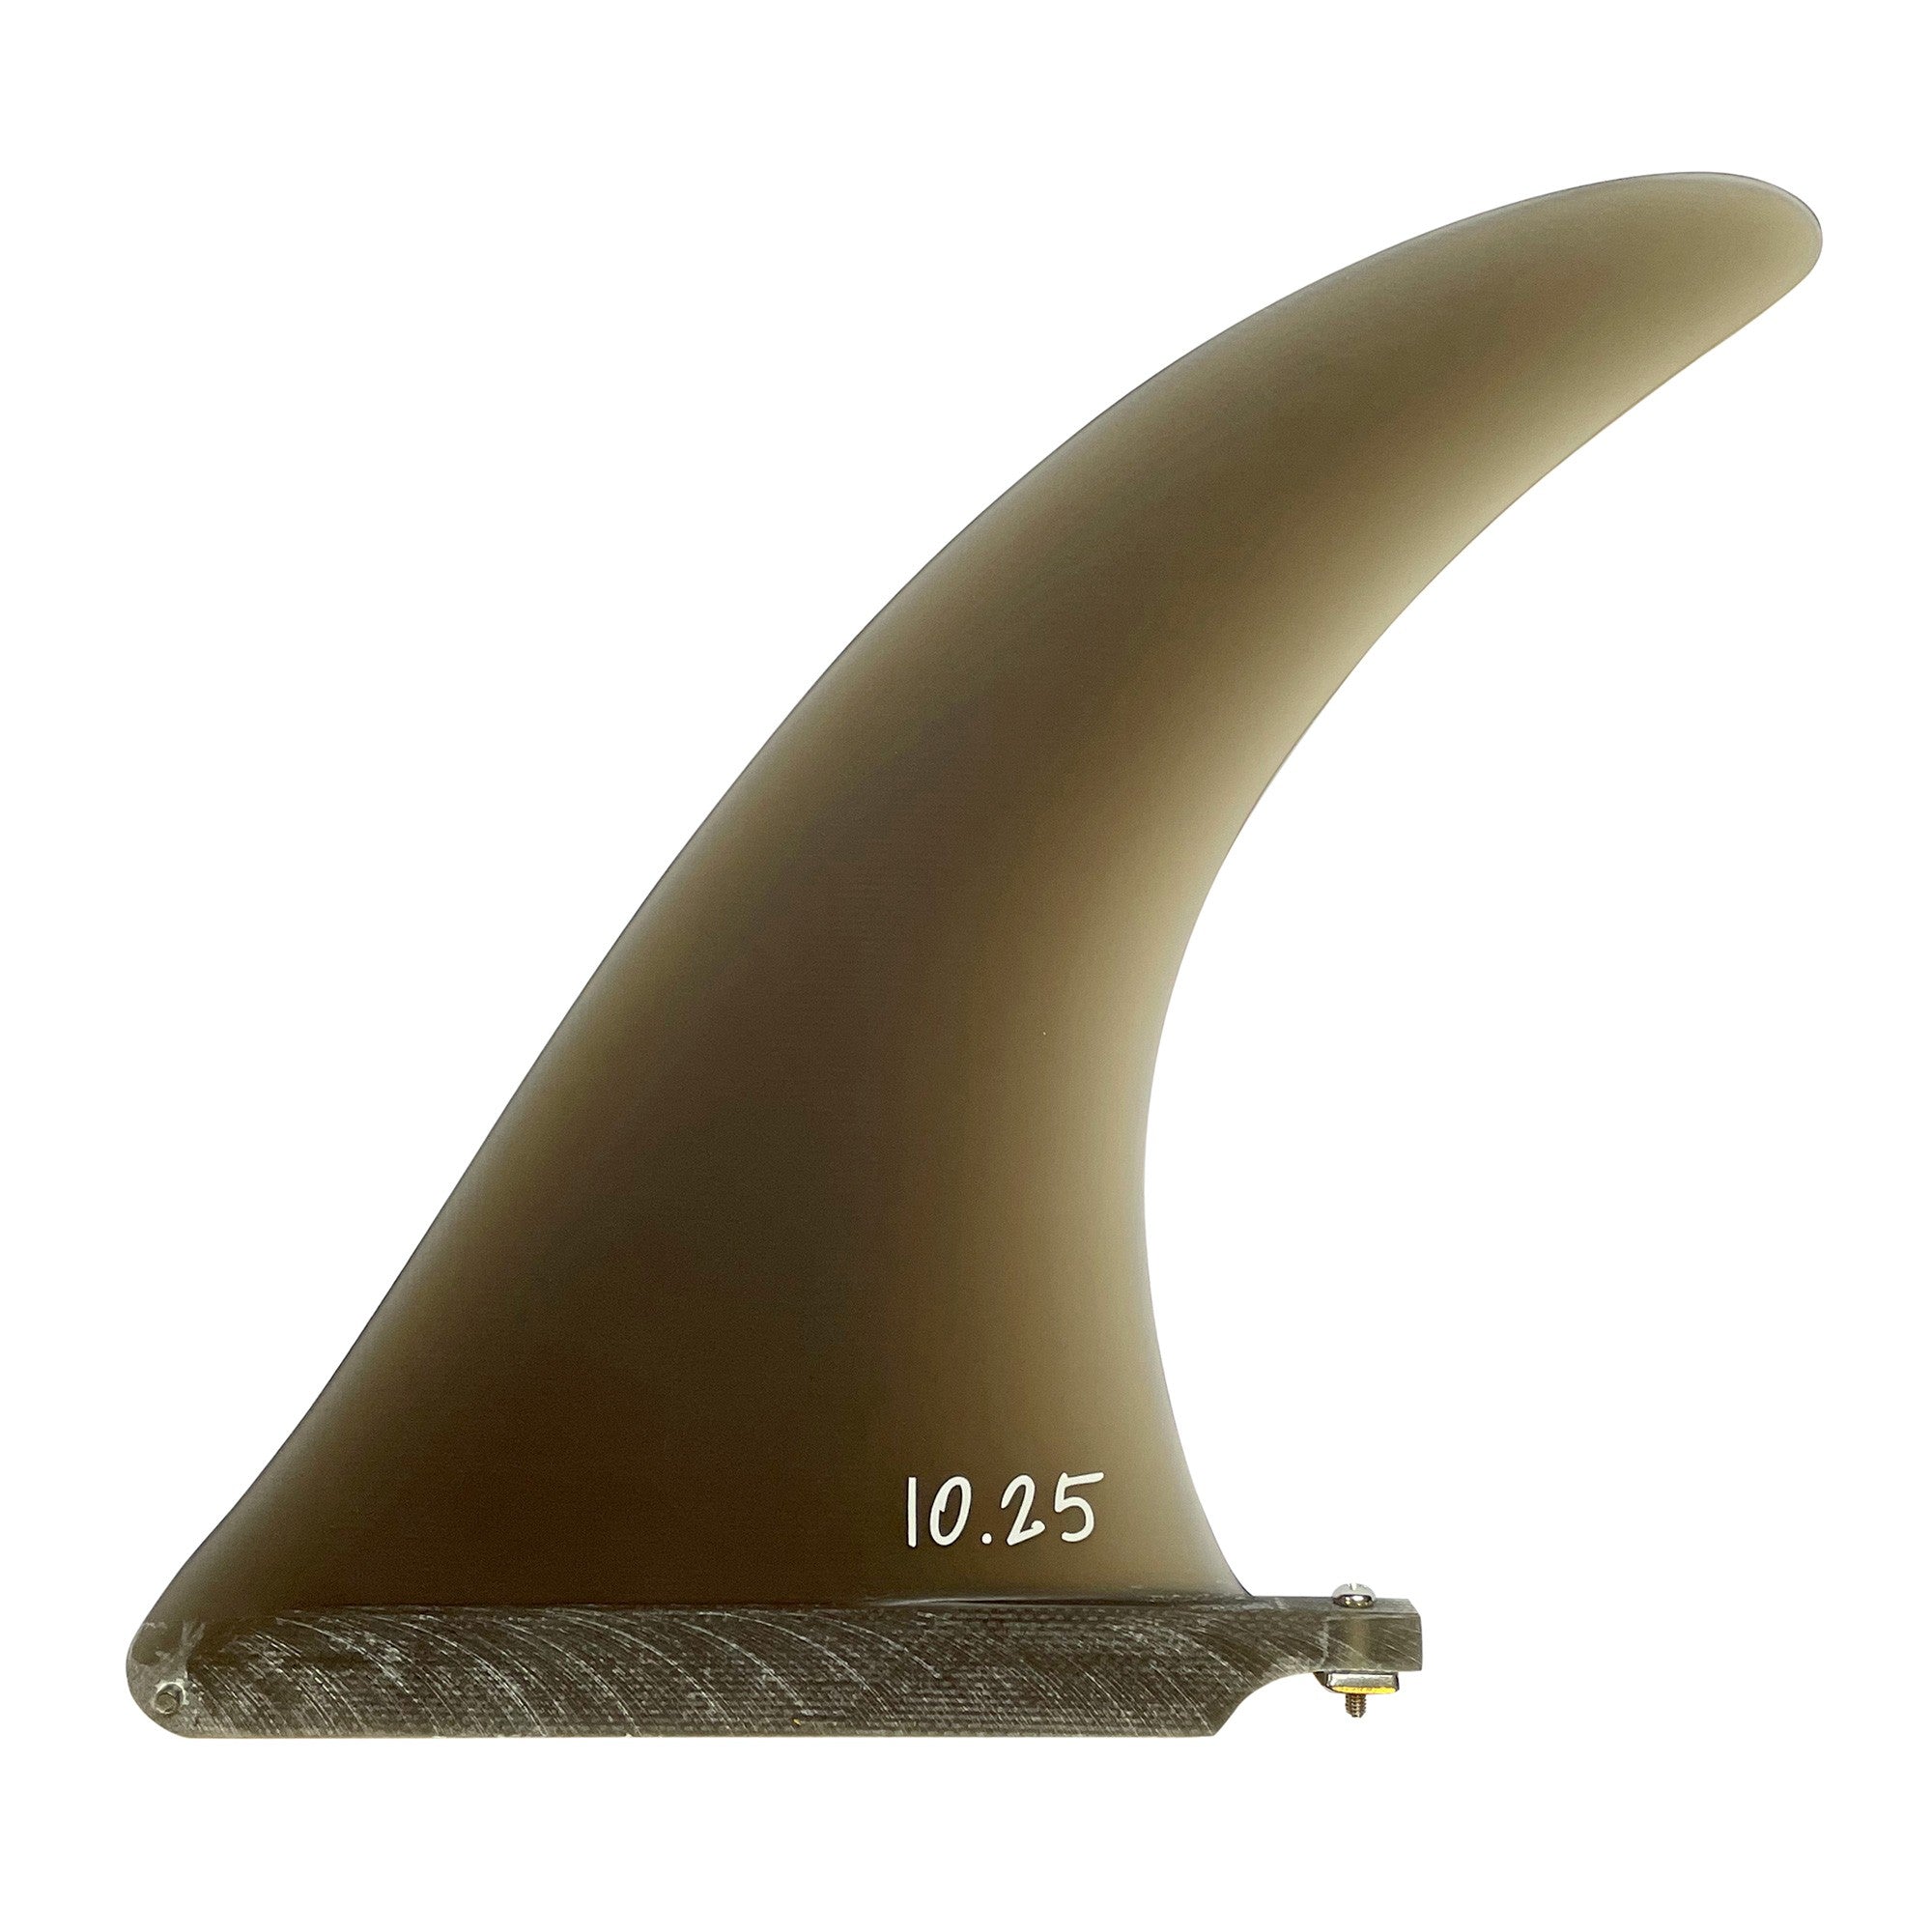 SISTEMA DE SURF - Aleta única de fibra de vidrio Dolphin (caja de EE. UU.) - Ahumado